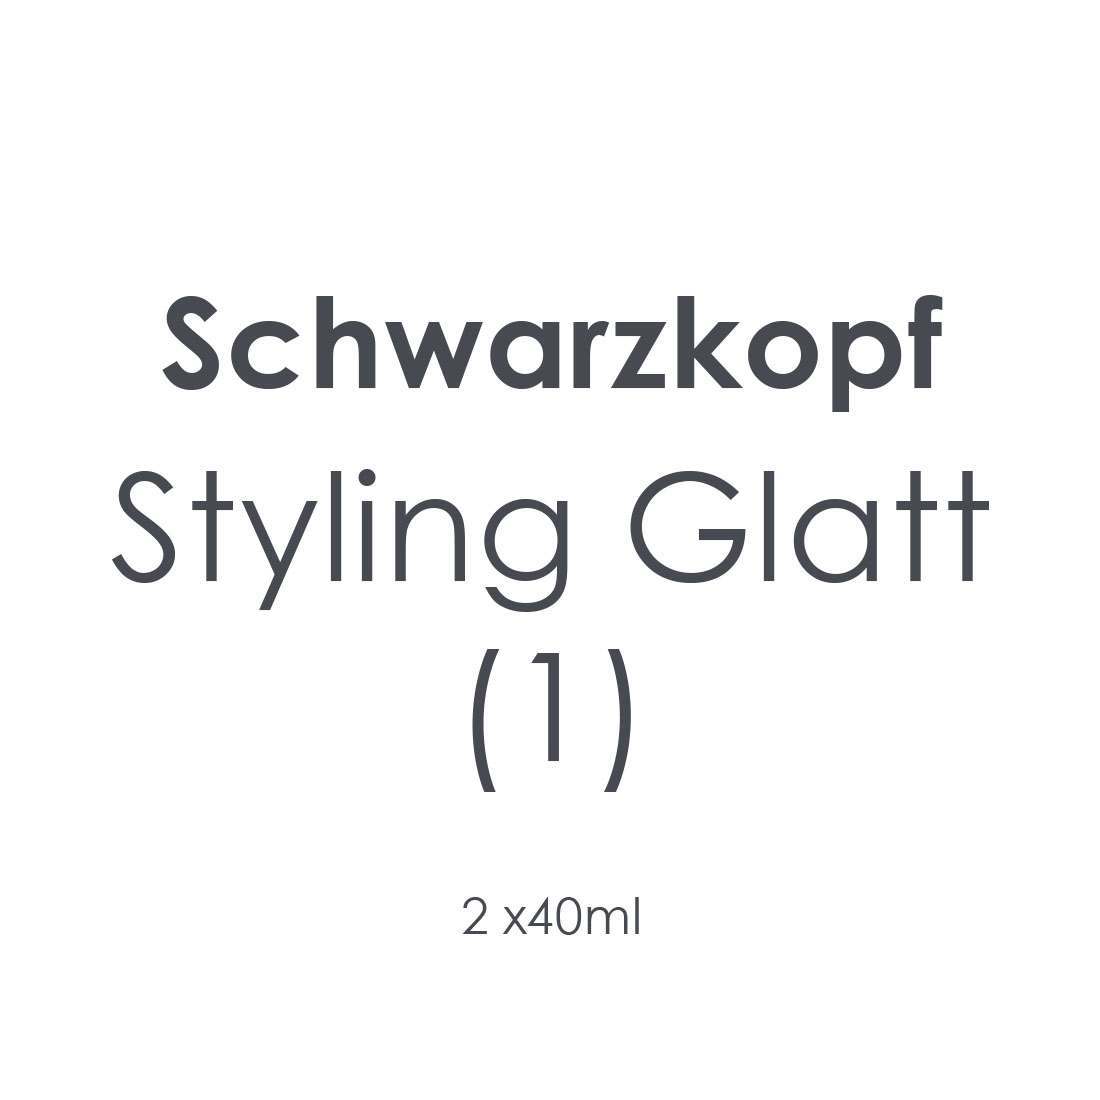 Photos - Hair Styling Product Schwarzkopf Styling Glatt (1) 2 x40ml sgla1x2 